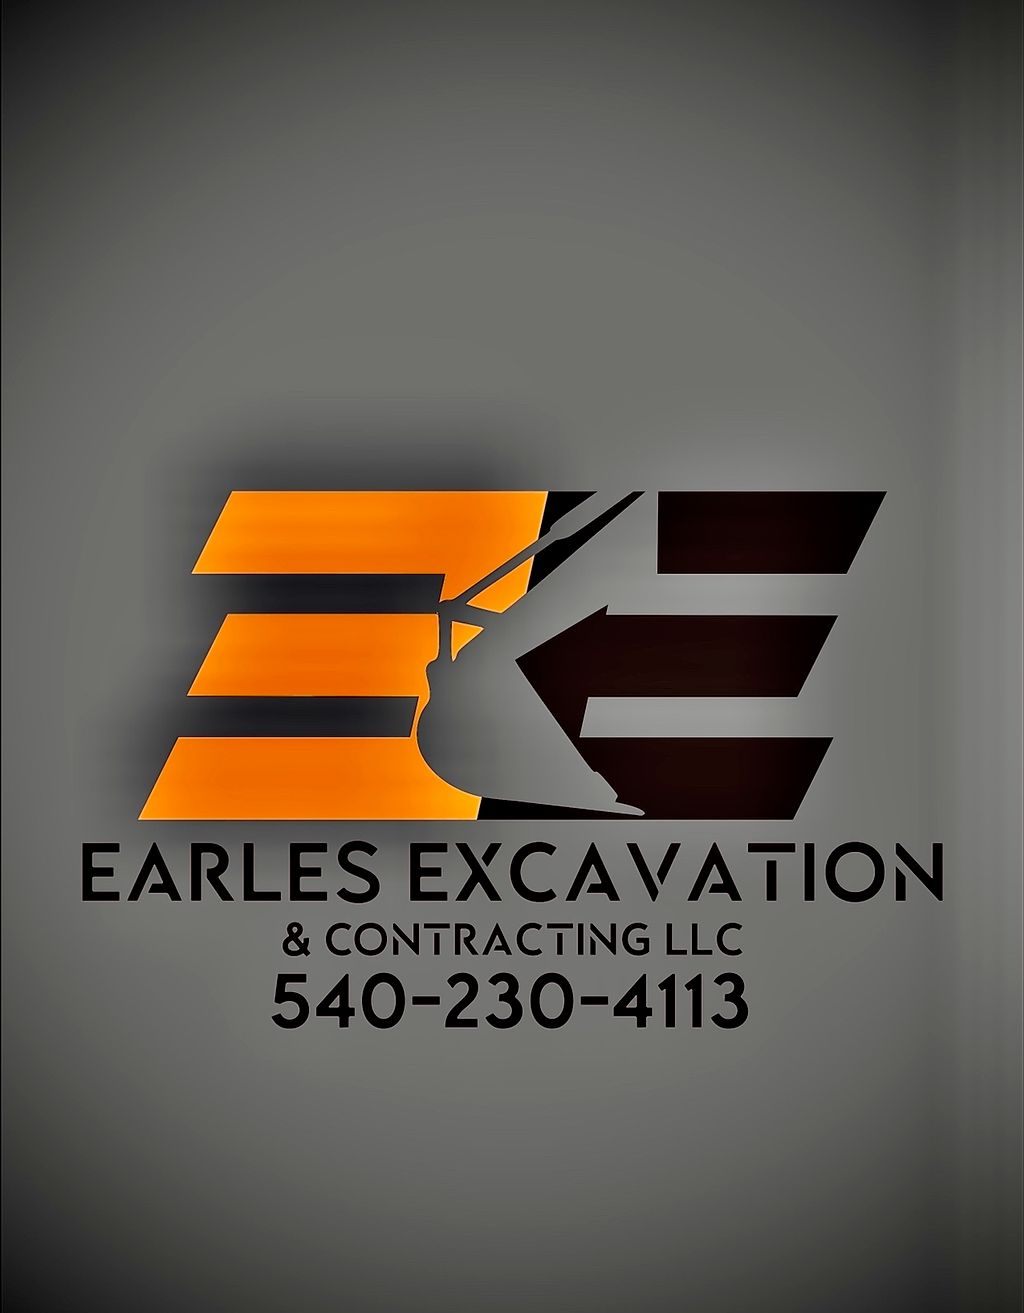 Earles Excavation & Contracting LLC